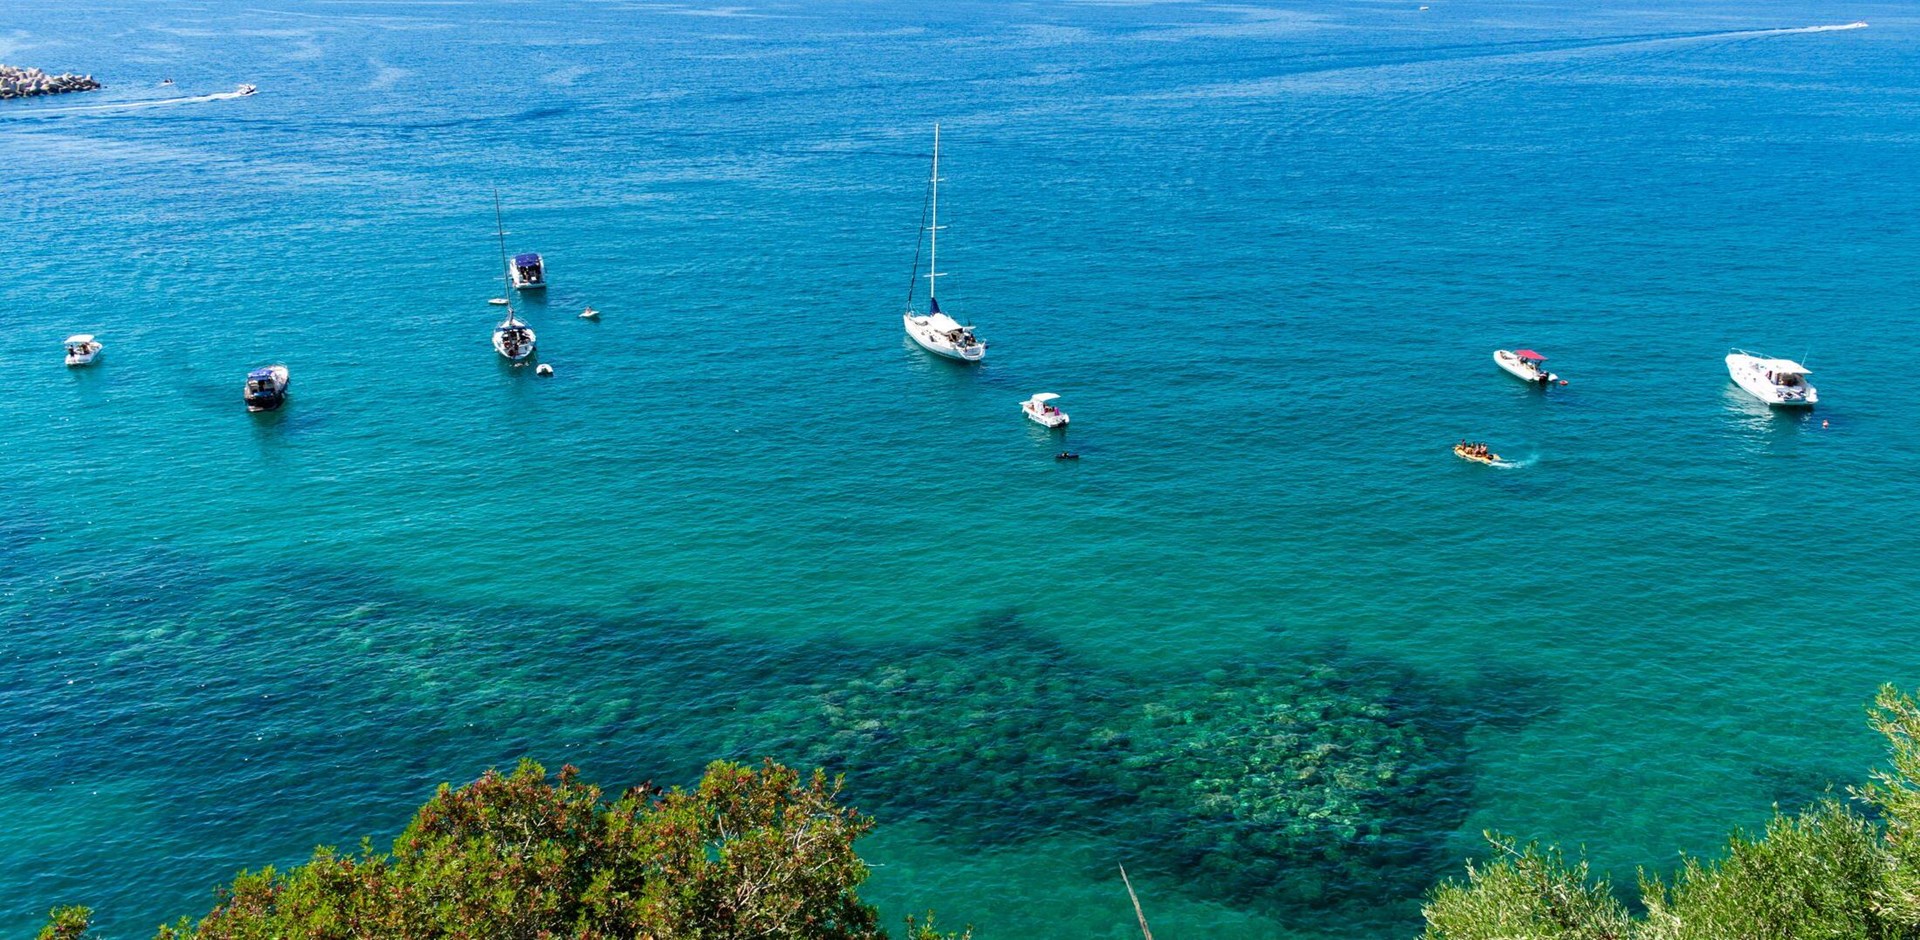 Italy, Campania, Palinuro - 11 August 2019 - The turquoise sea of ​​the port of Palinuro